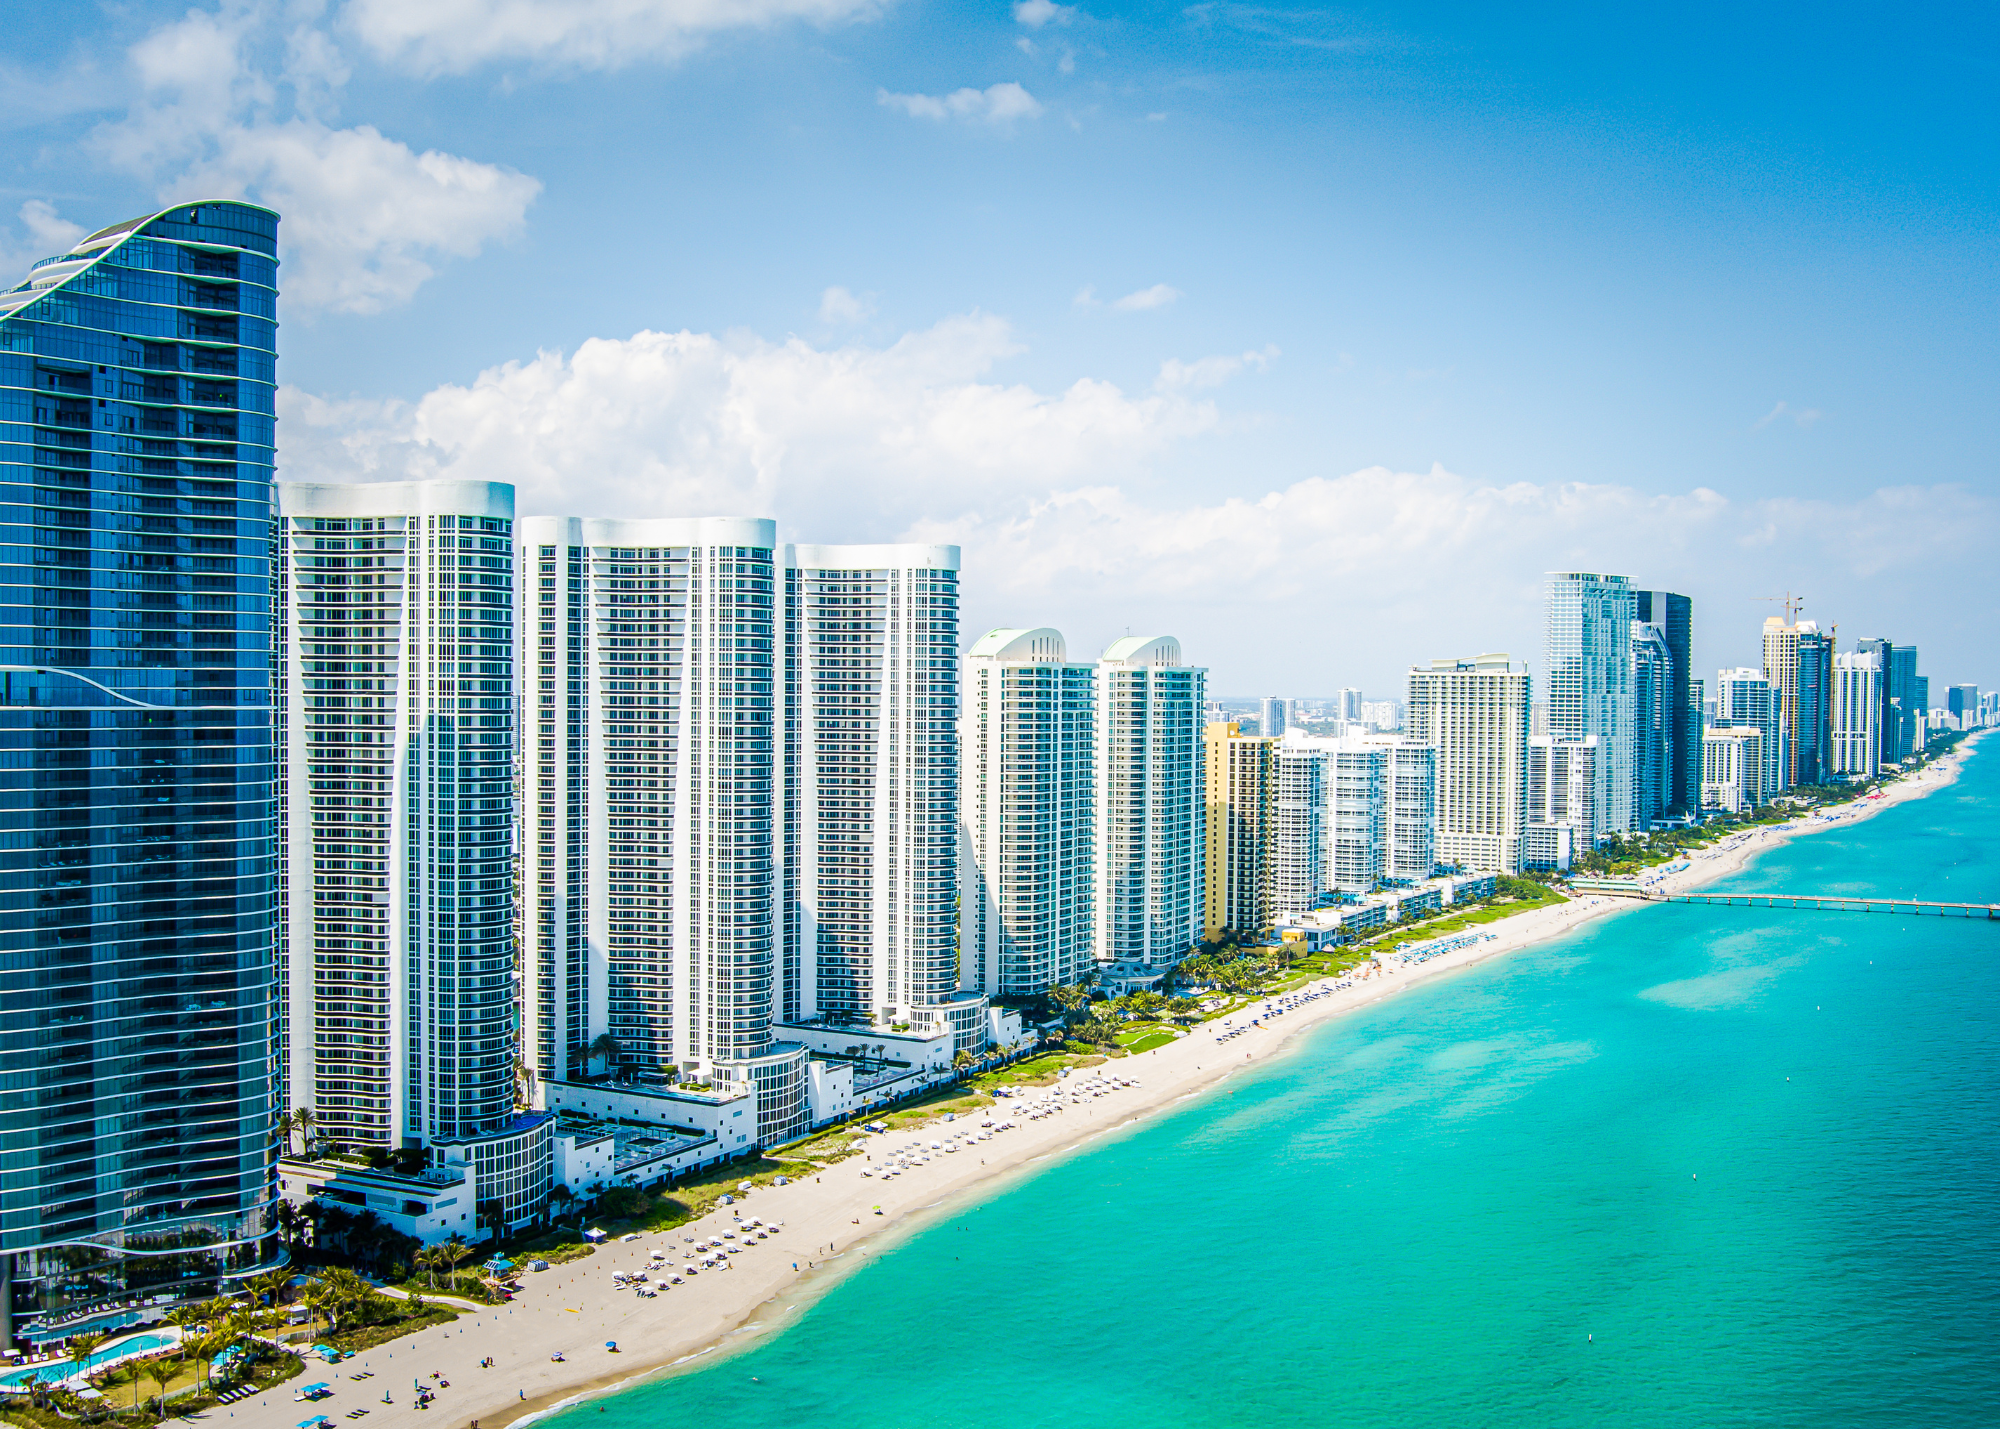 Miami Real Estate News